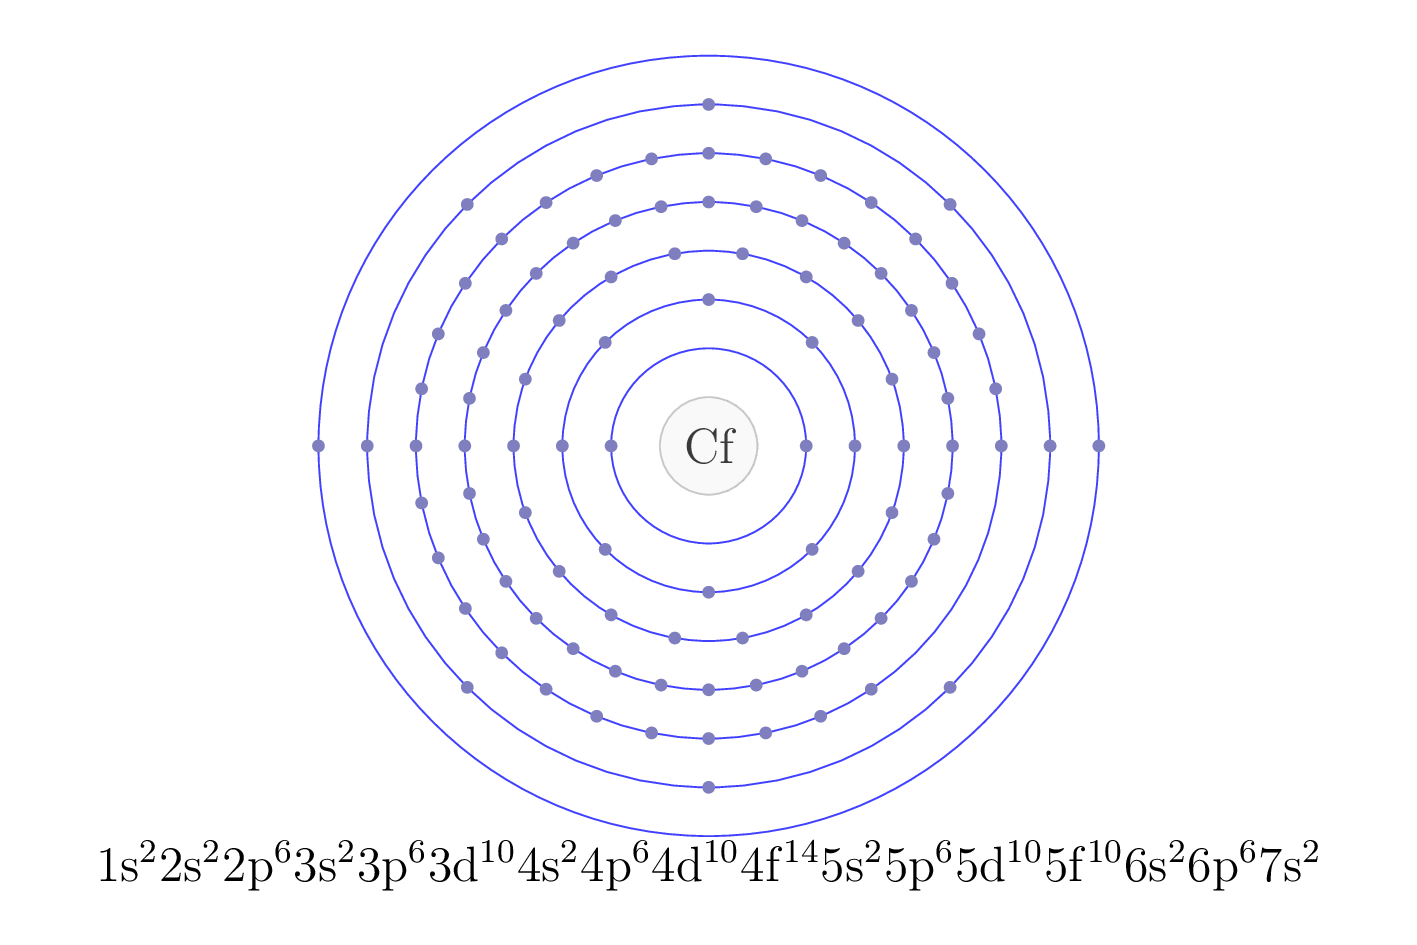 electron configuration of element Cf